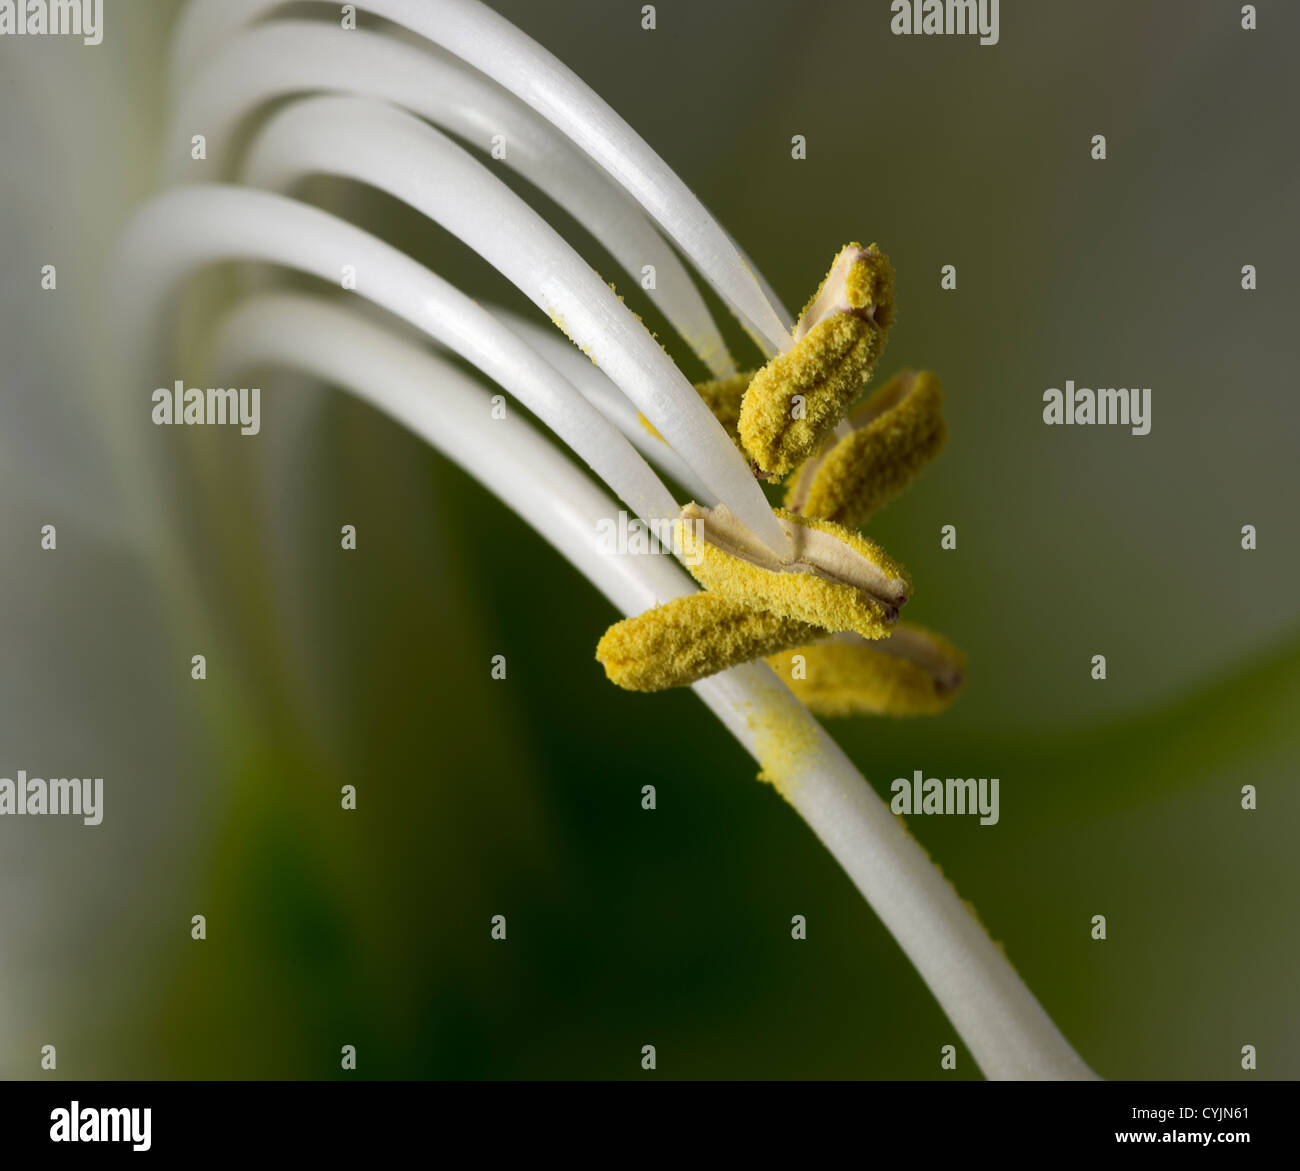 details of the stem of amaryllis Stock Photo